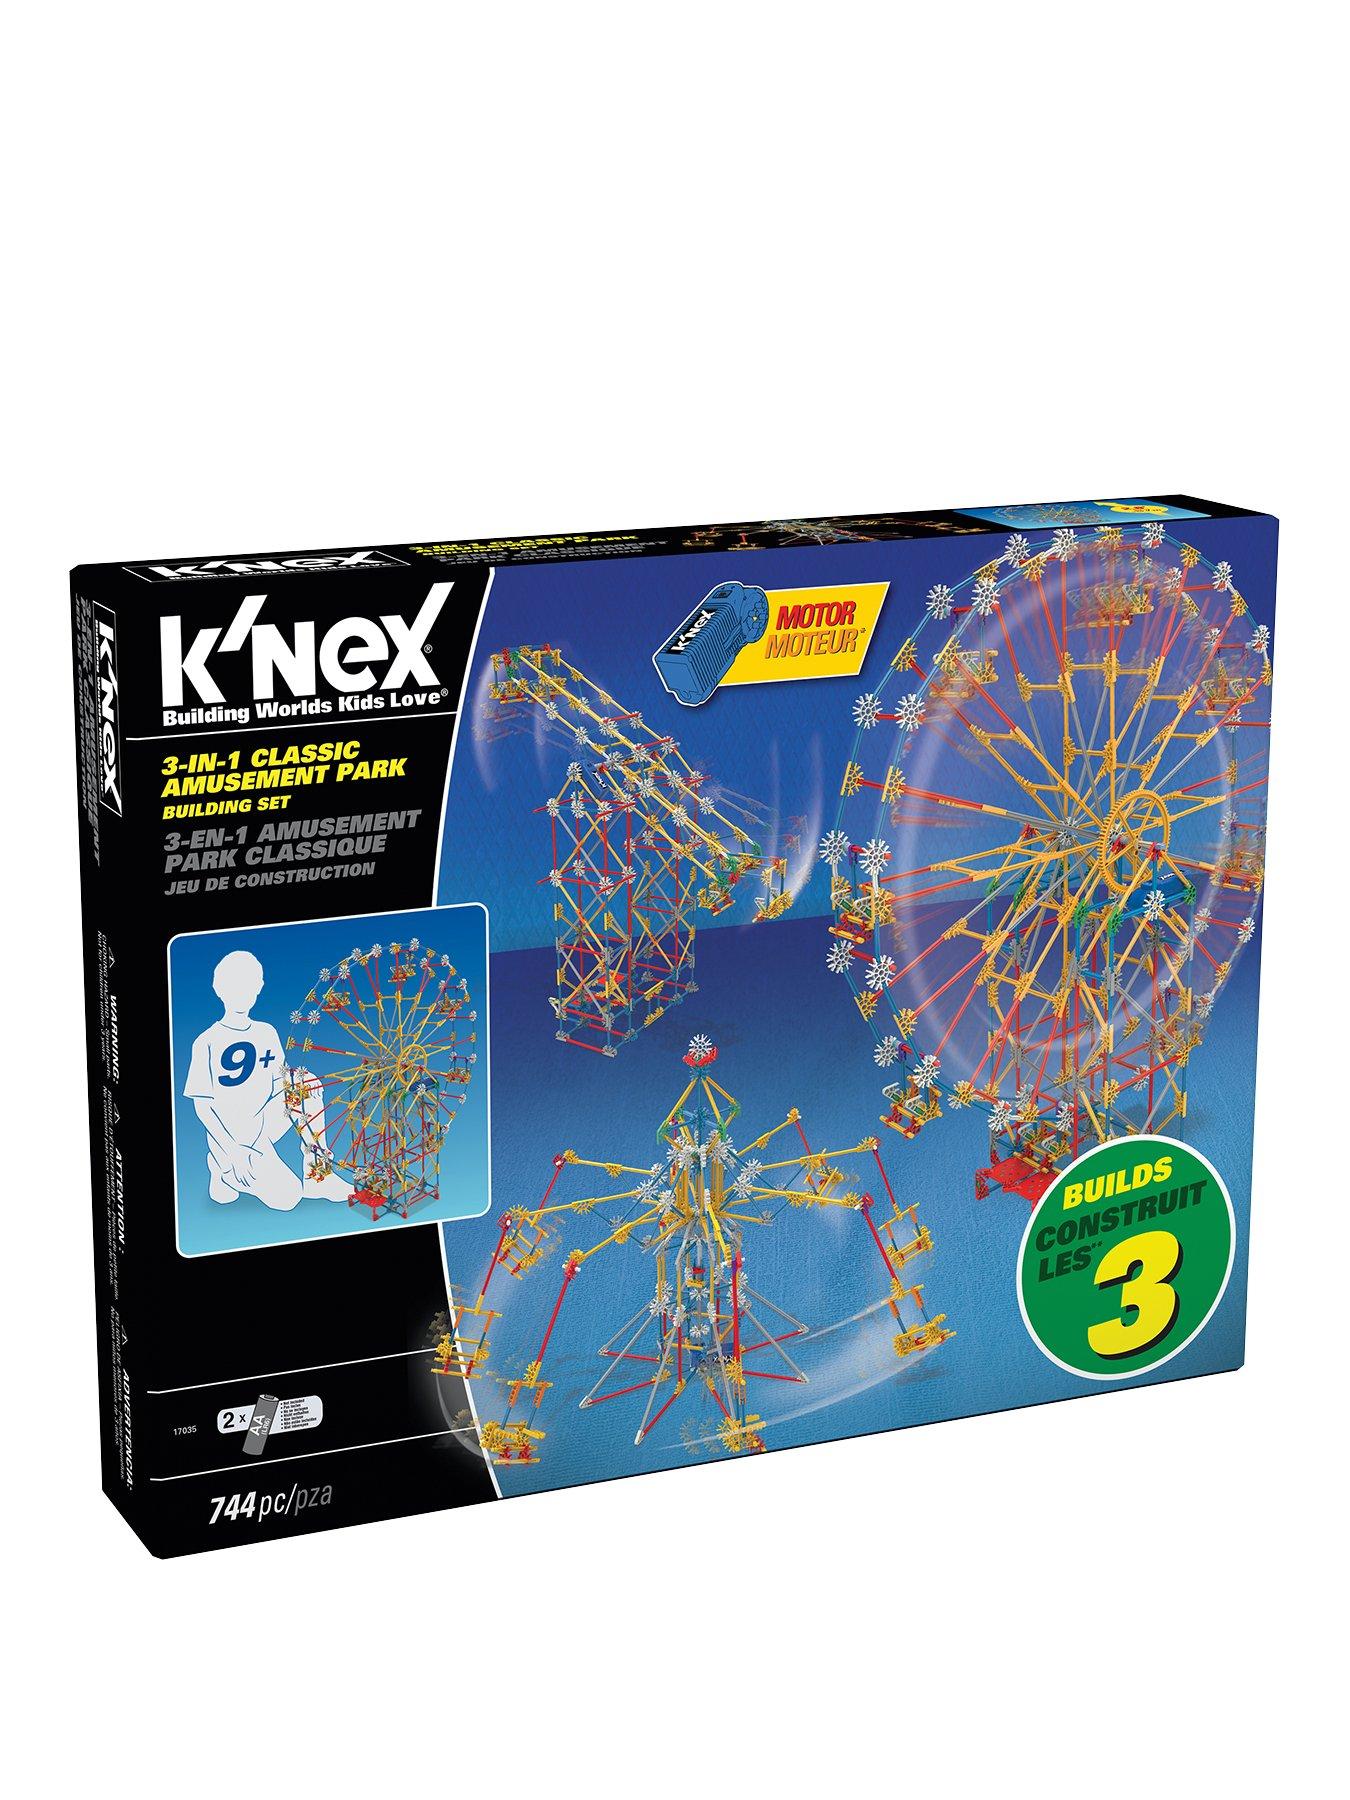 knex offers